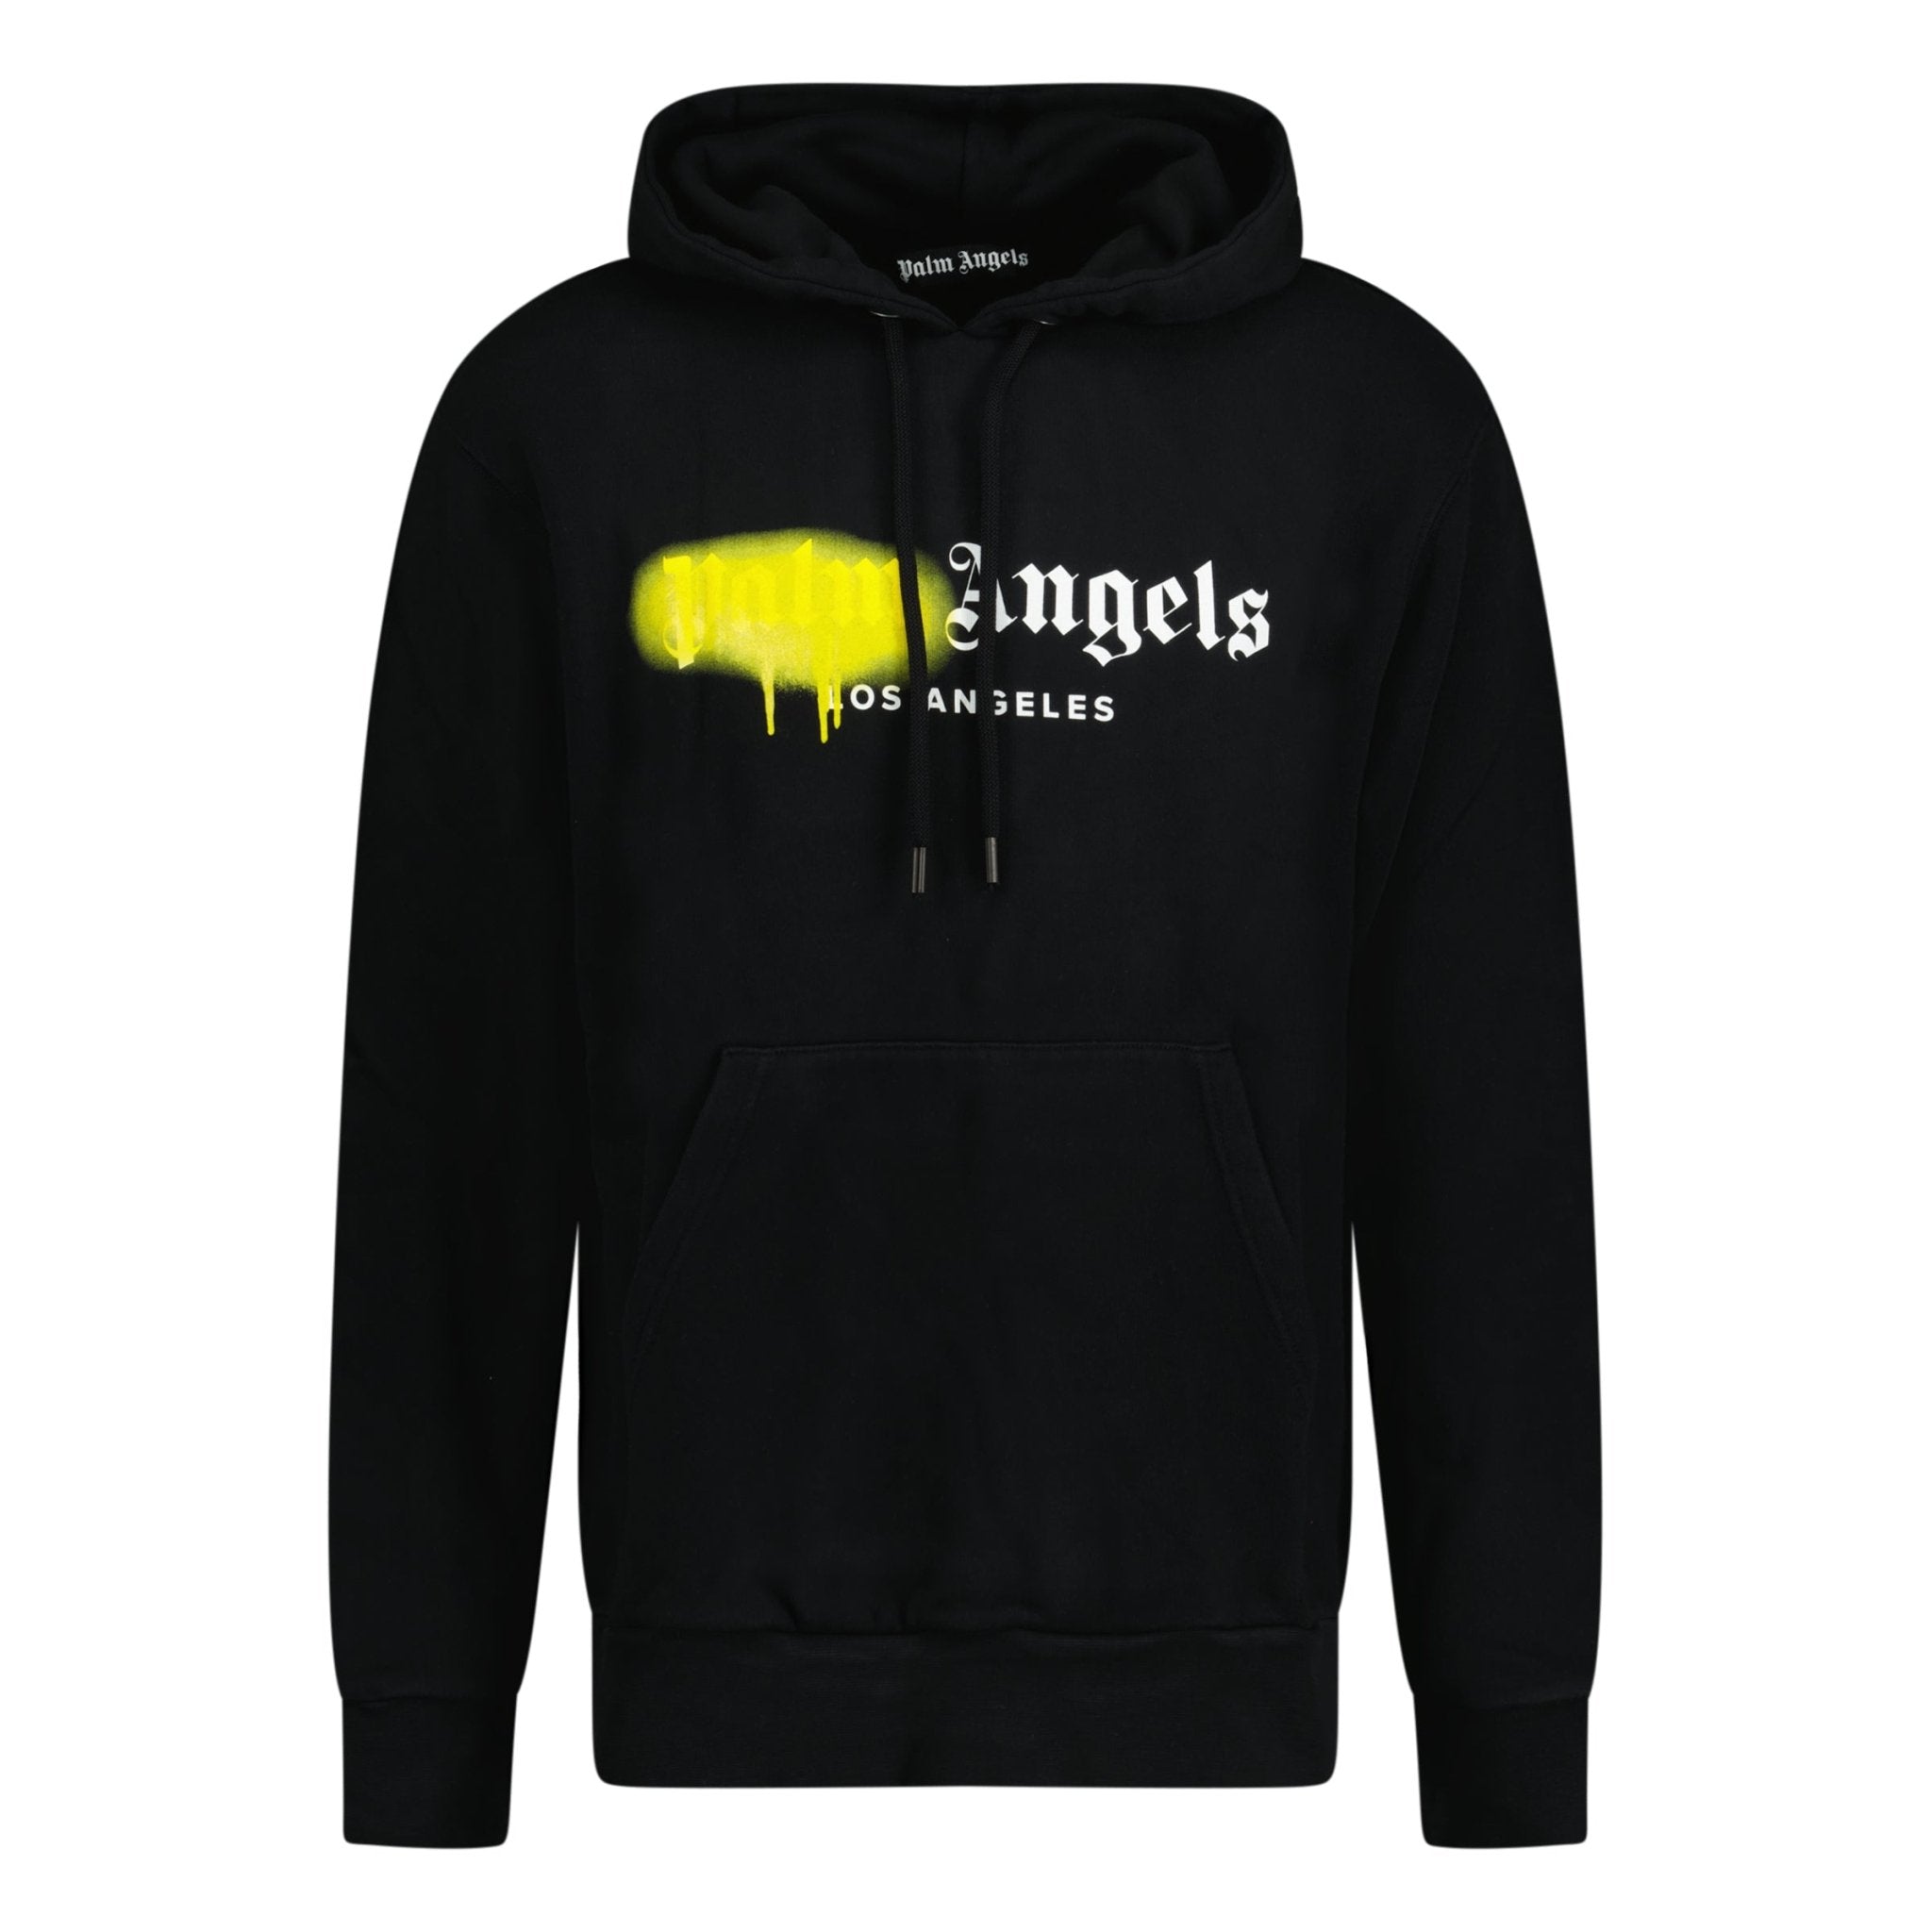 Palm Angels Los Angeles Sprayed Logo Hooded Sweatshirt Black